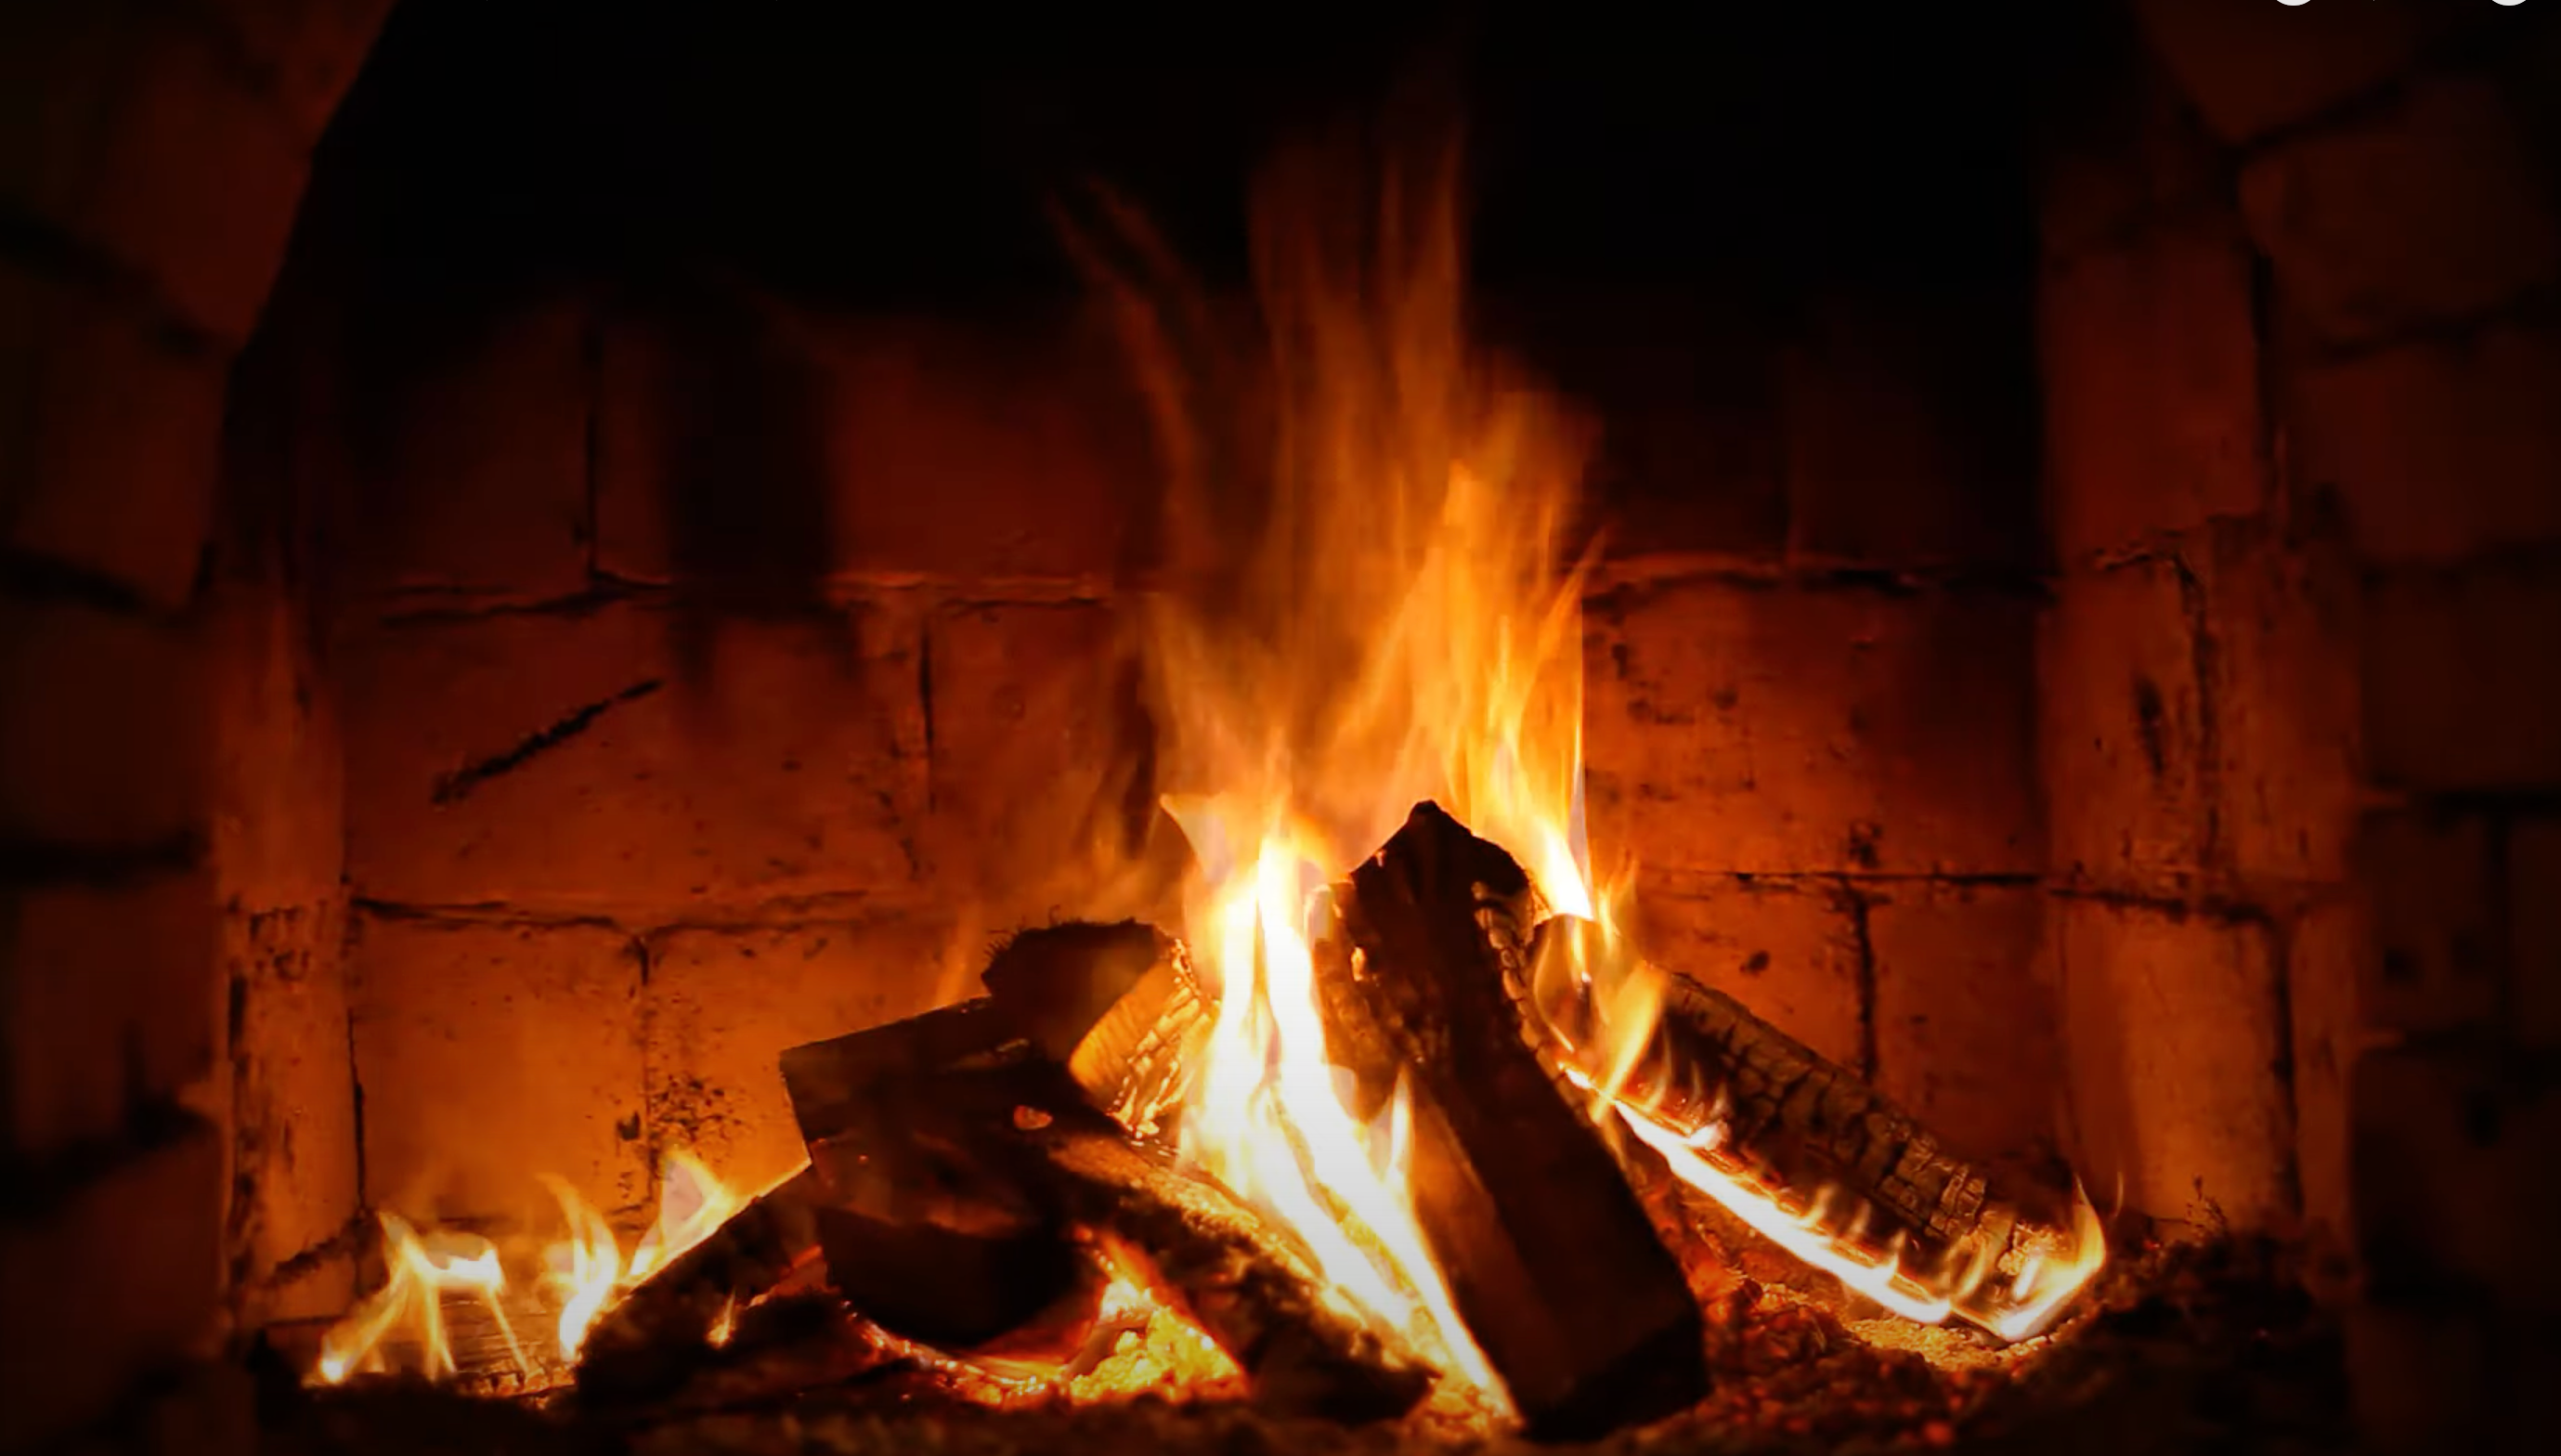 Beautiful Burning Fire Place with Reddish Orange Hot Logs Burning | Life Coaching Talk Therapy | Elite Dating and Relationship Coaching